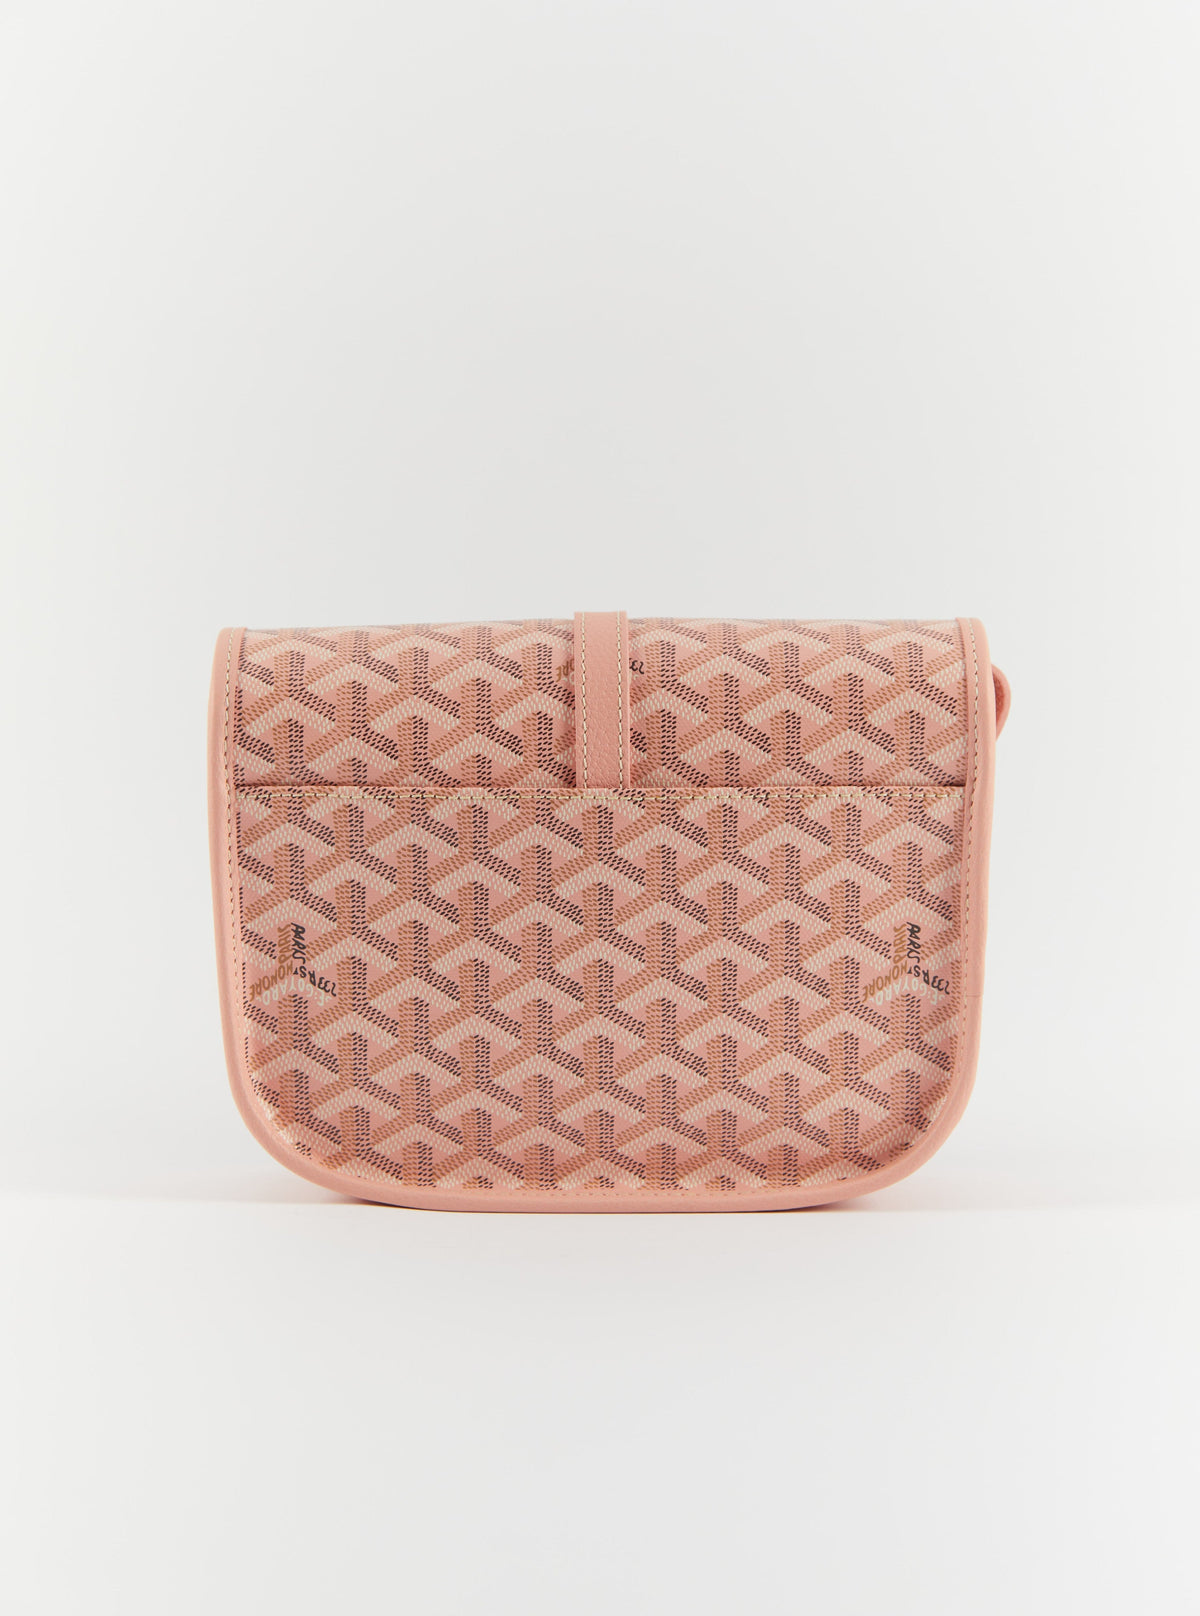 Goyard Belvedere Crossbody Bag PM Pink (Limited Edition) – The Luxury  Shopper